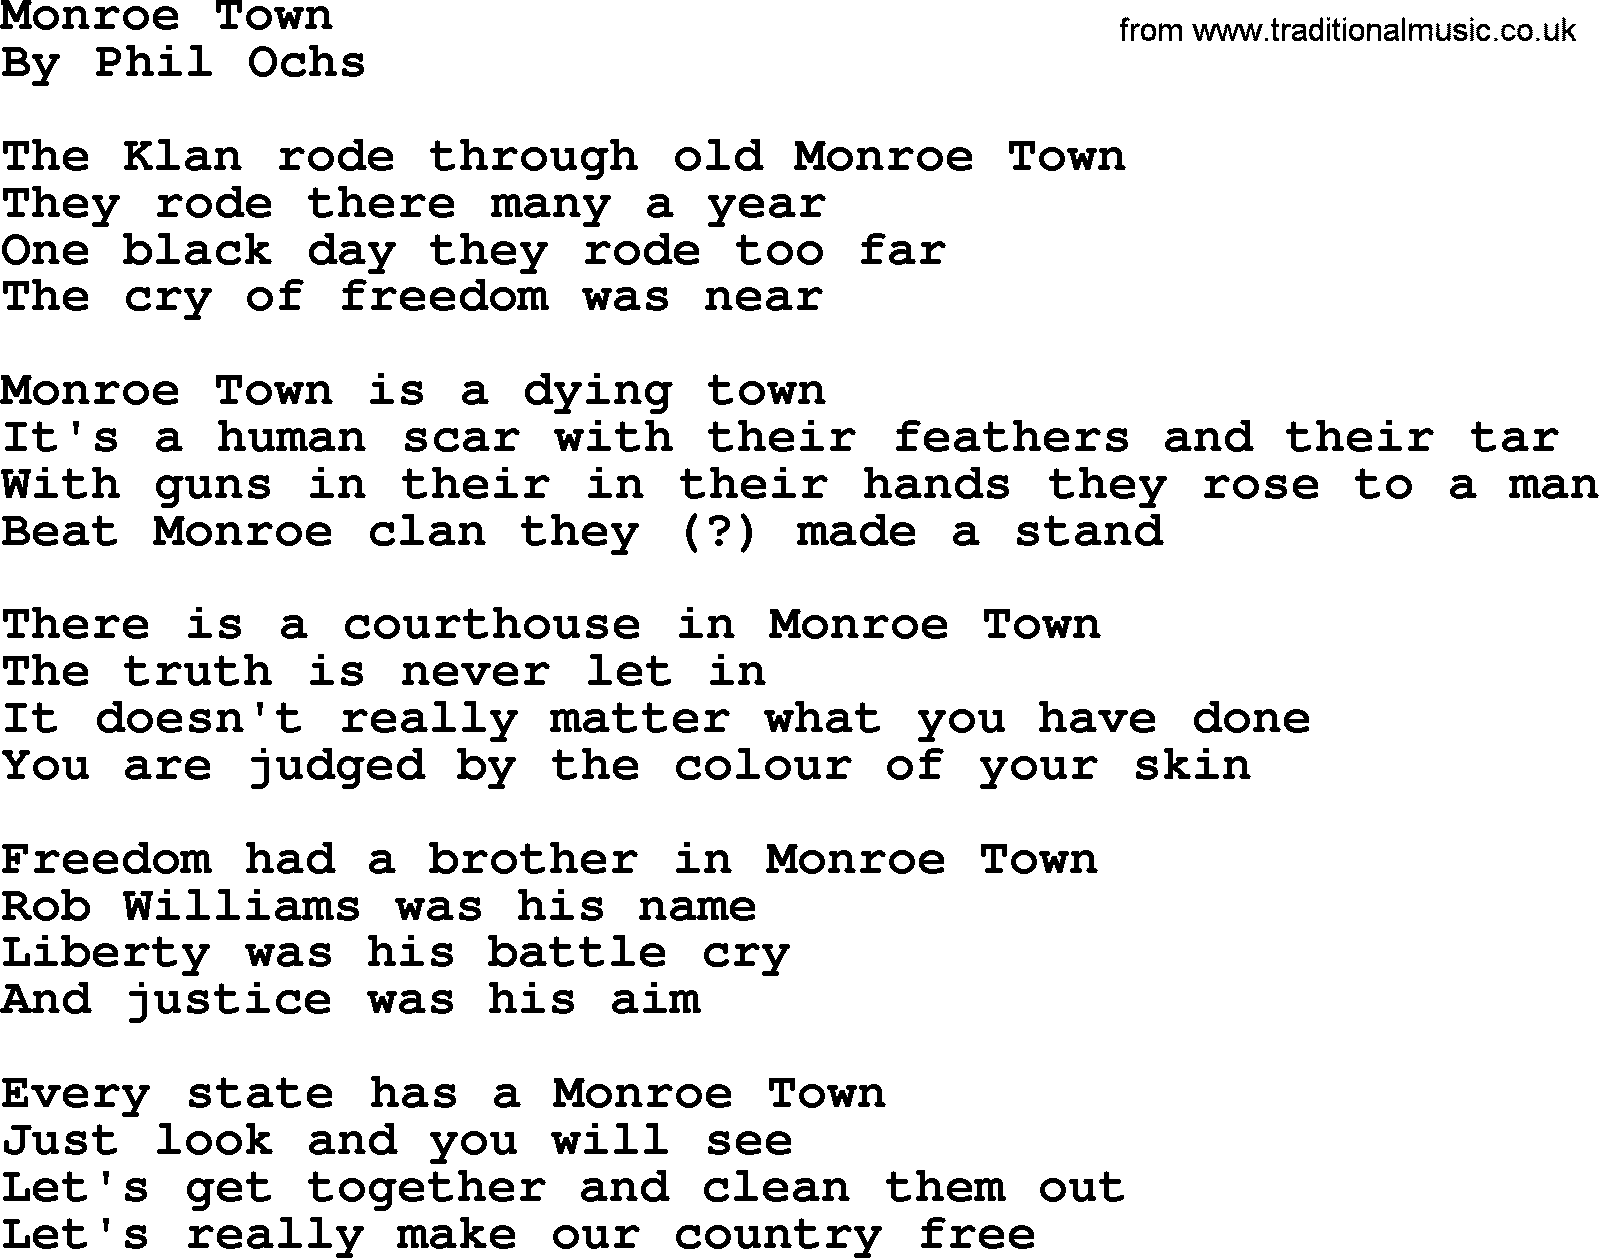 Phil Ochs song Monroe Town, lyrics